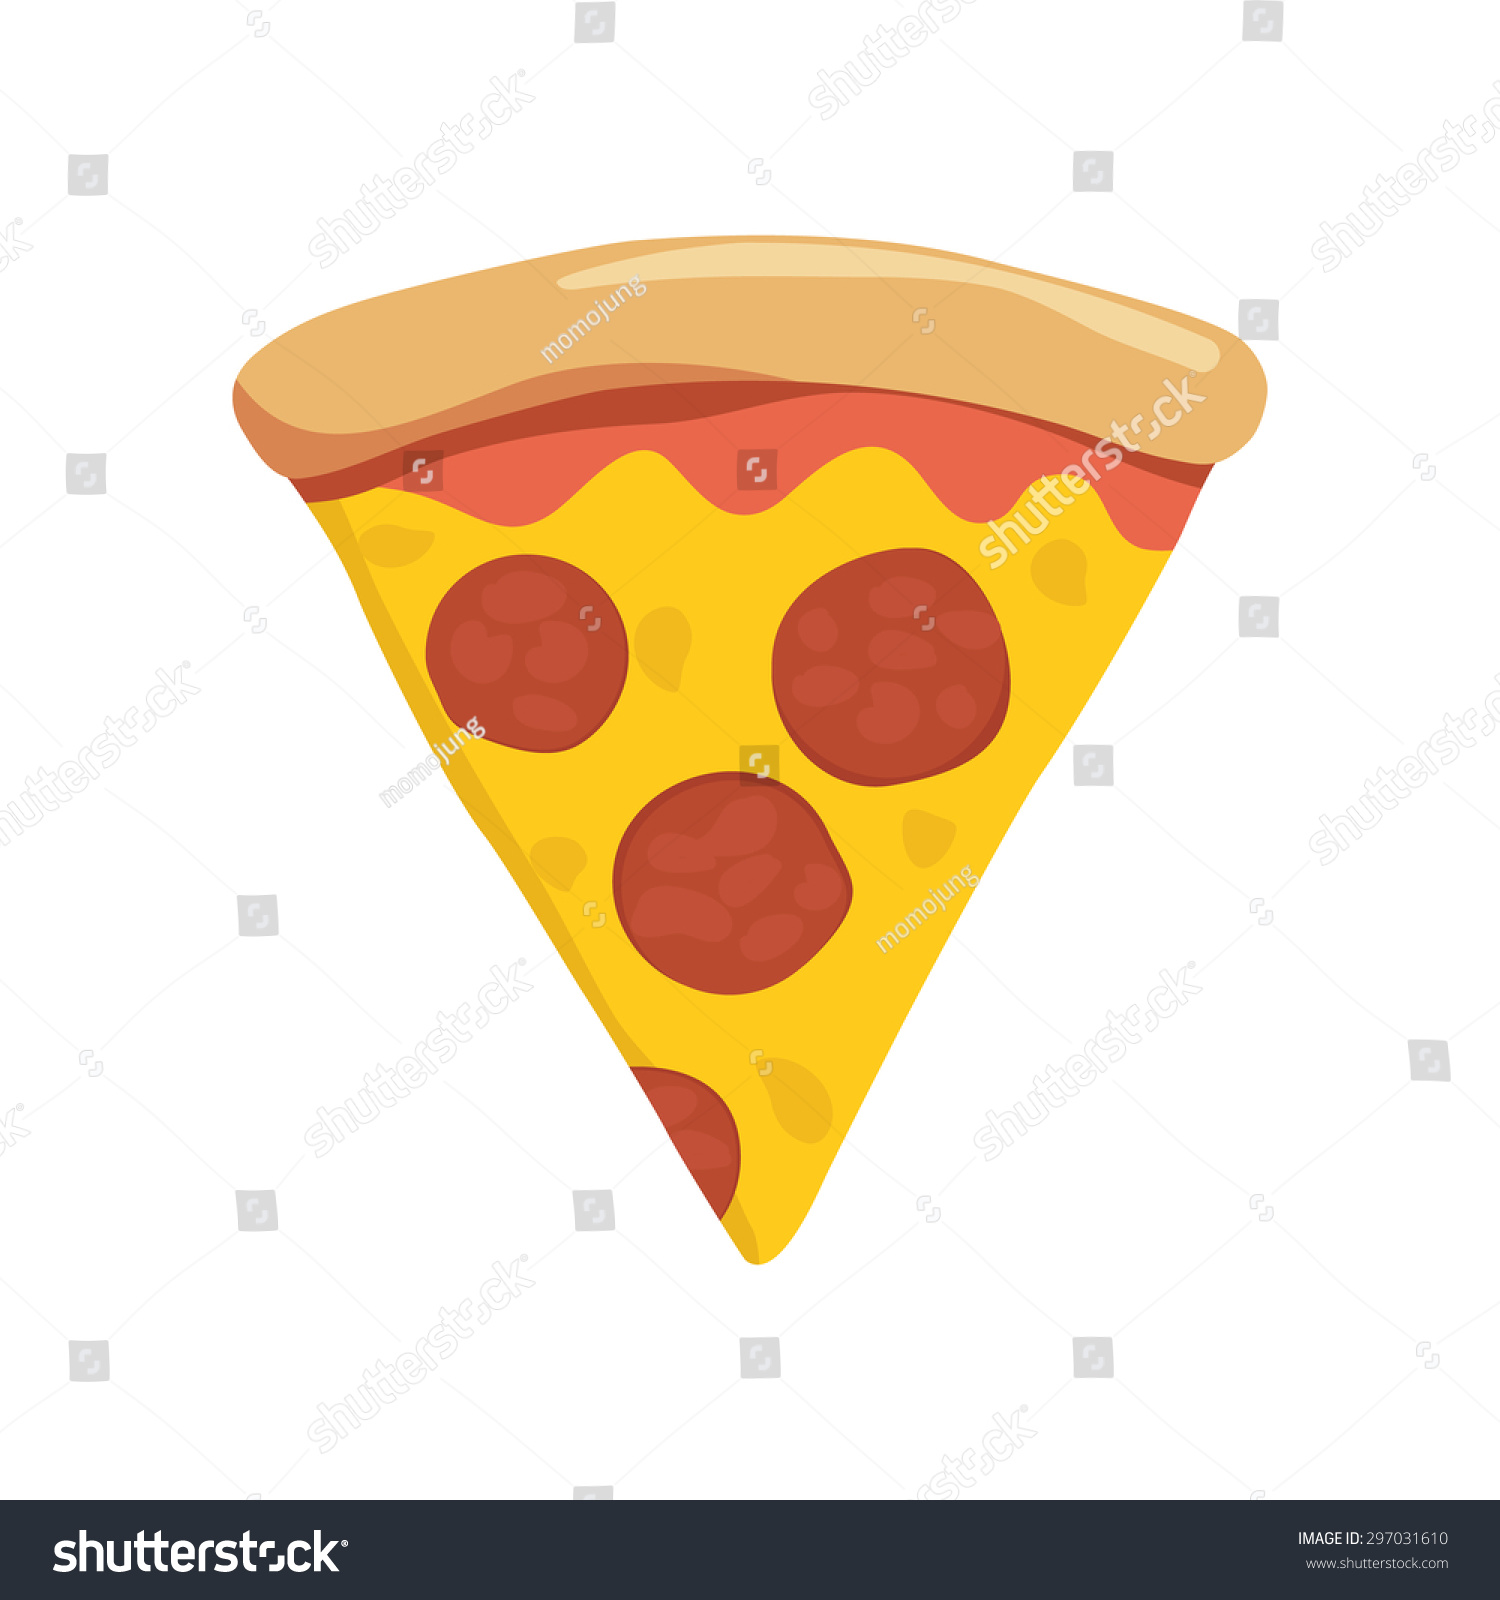 pizza clipart vector - photo #44